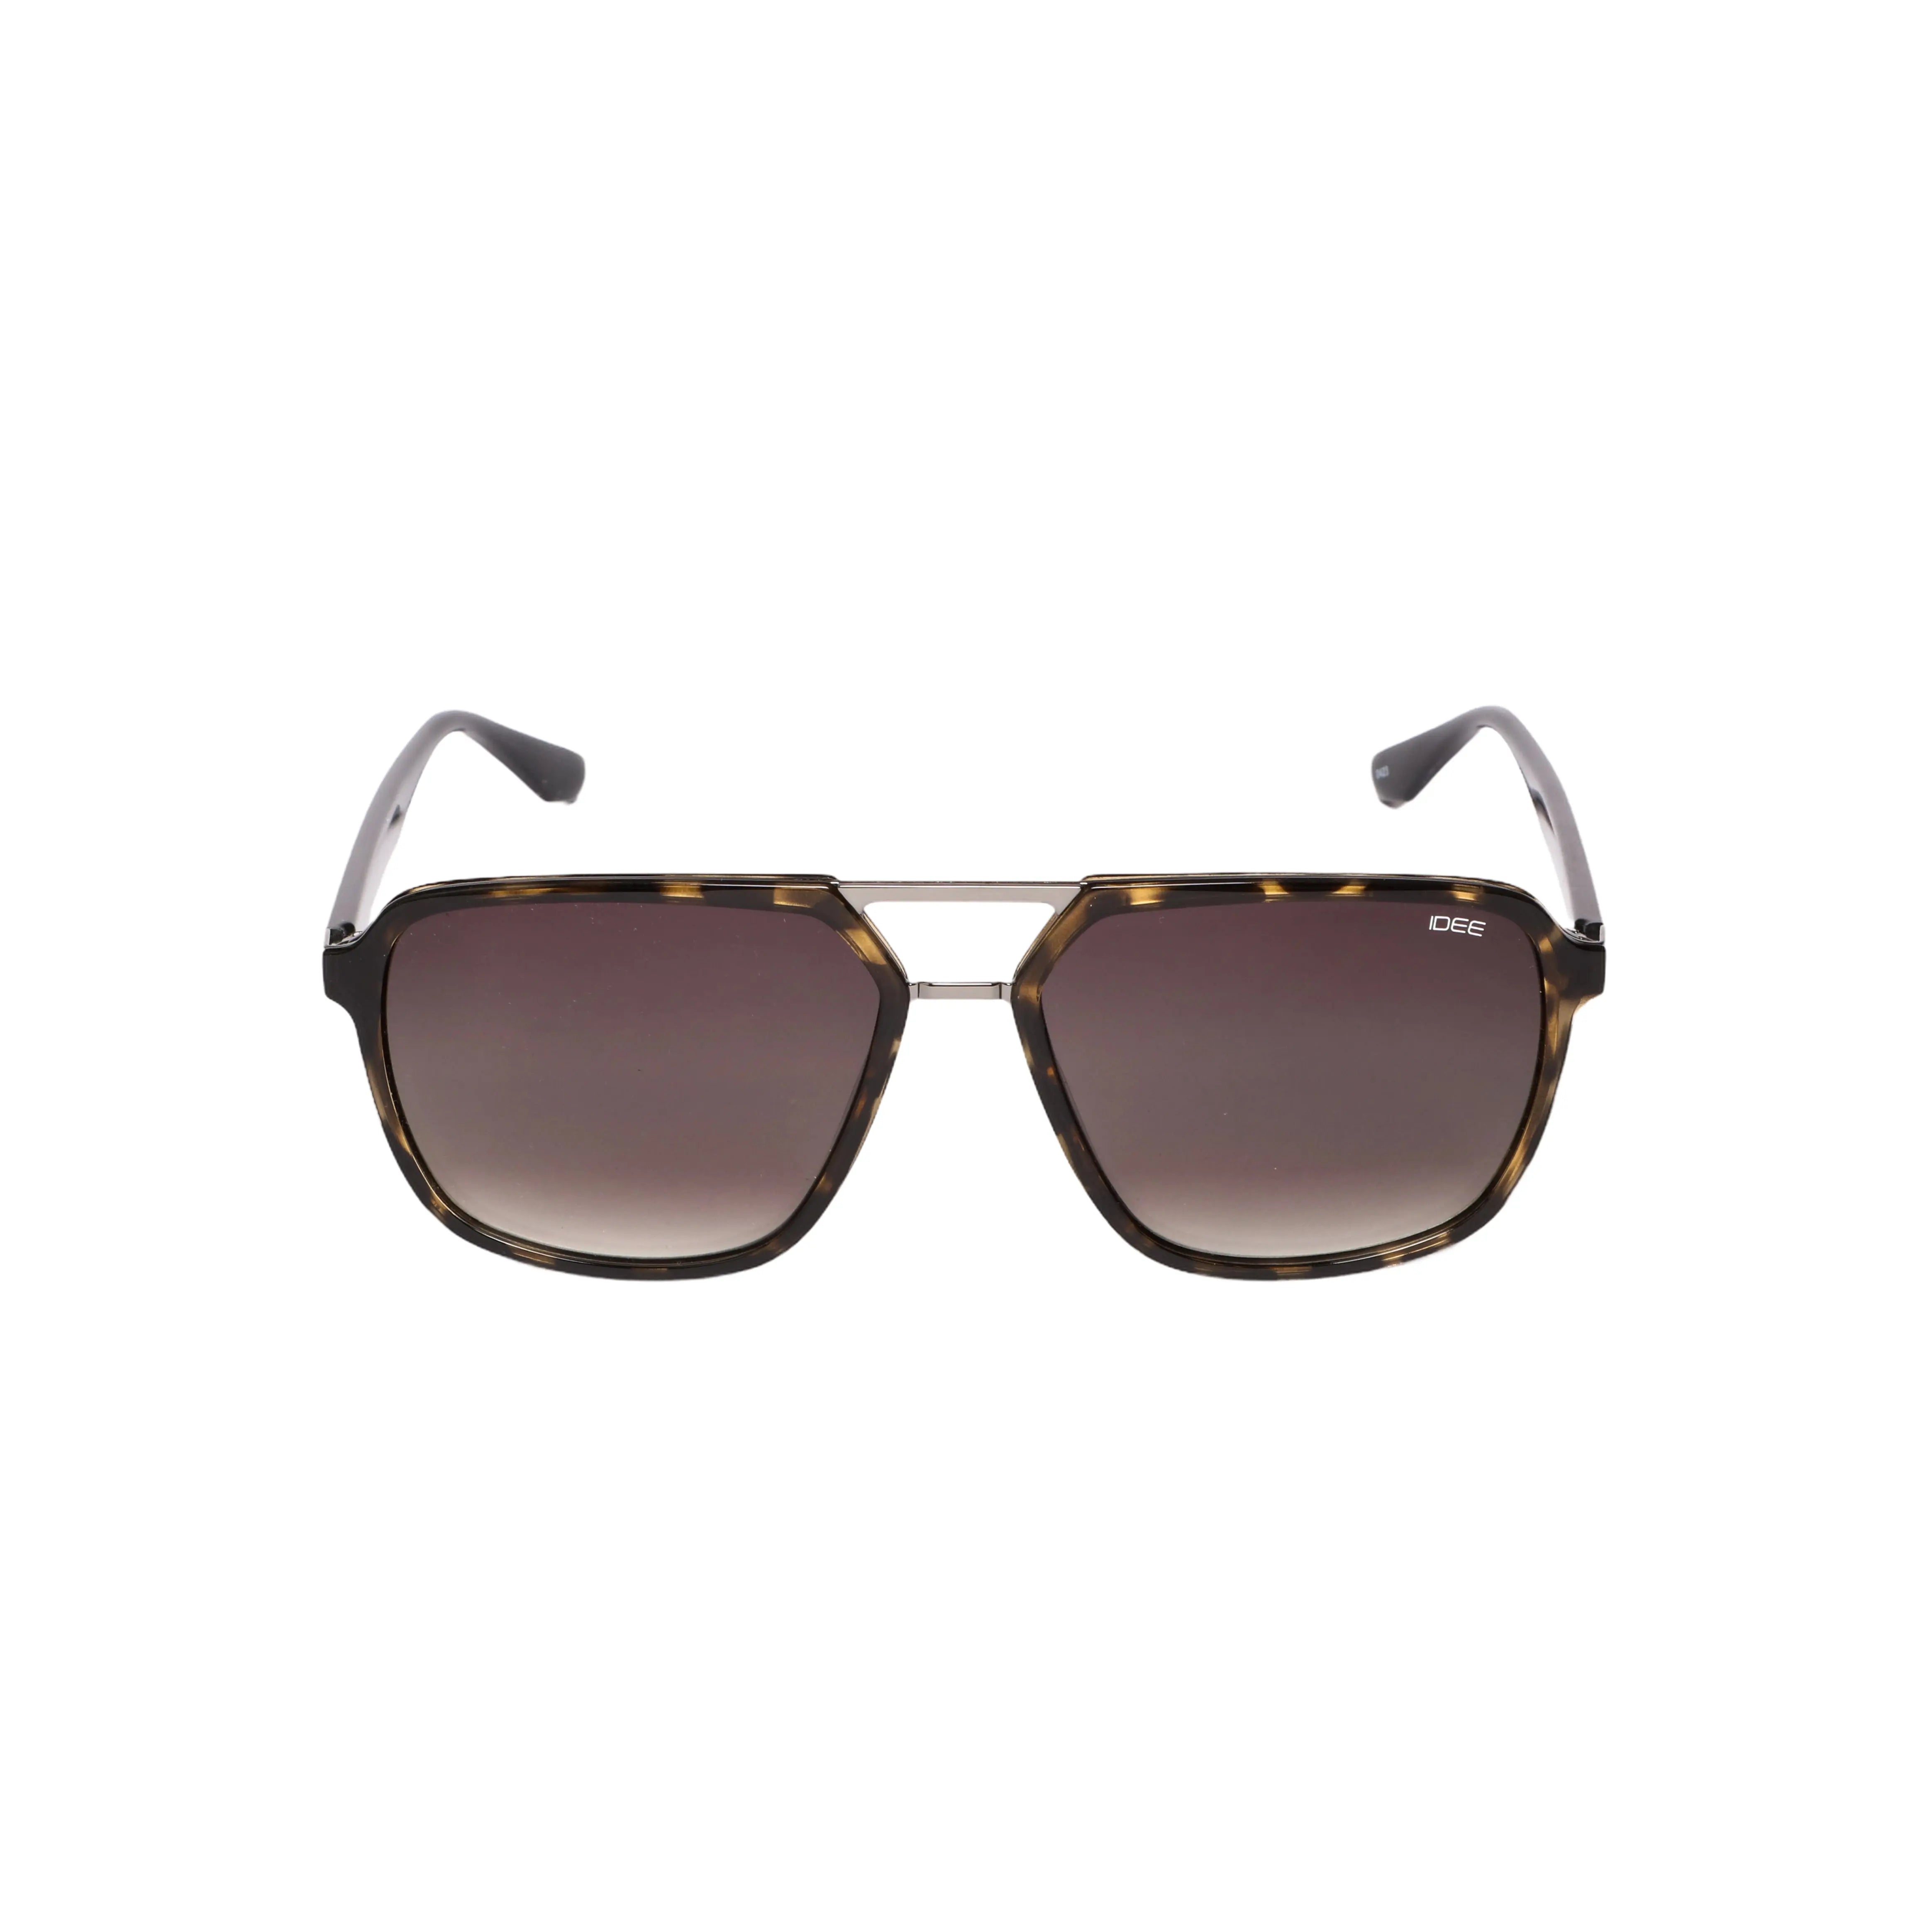 IDEE-S2987--C2 Sunglasses - Premium Sunglasses from IDEE - Just Rs. 3740! Shop now at Laxmi Opticians